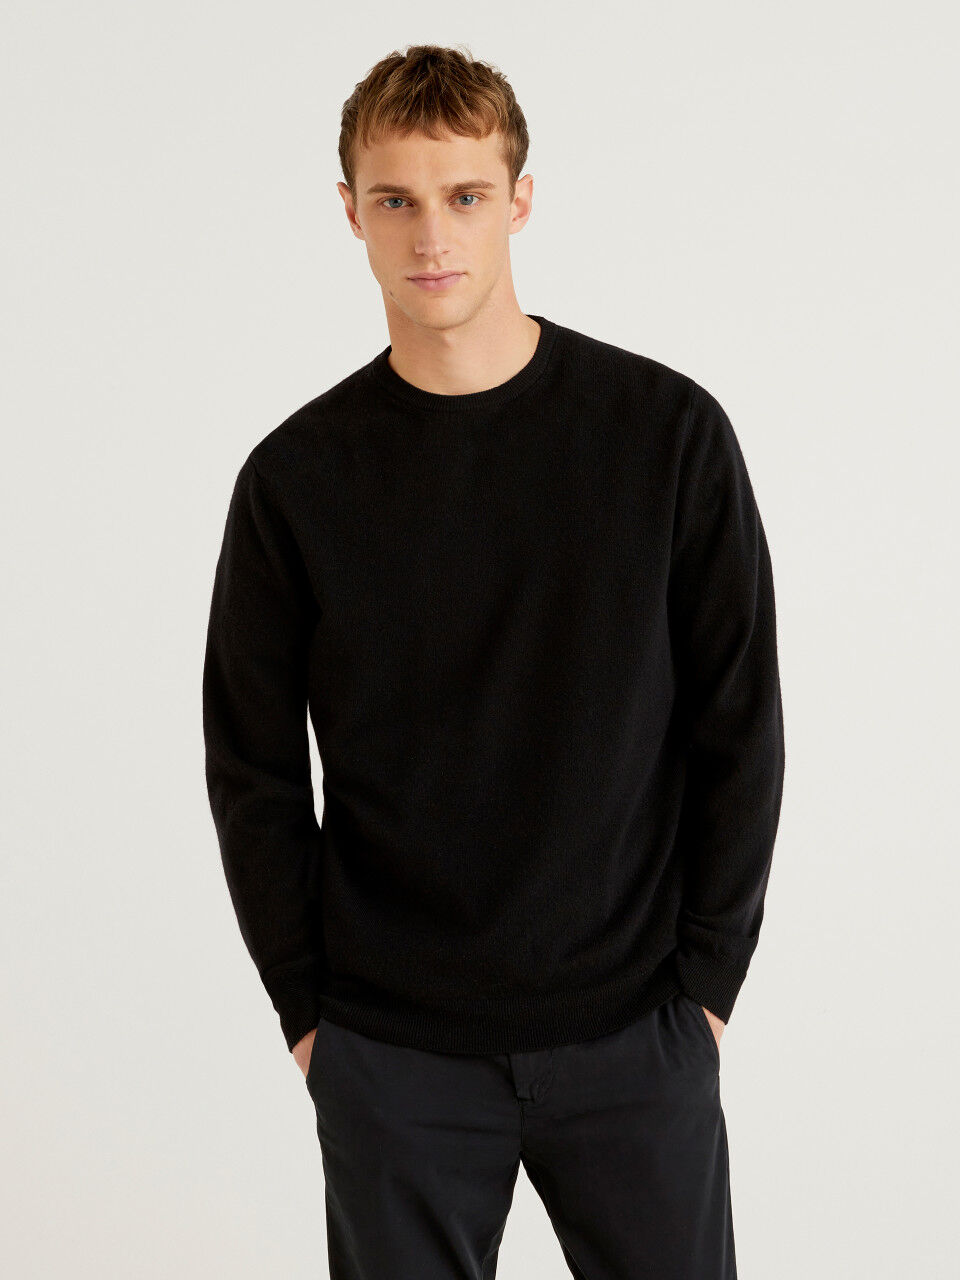 Black crew neck sweater in pure Merino wool customizable